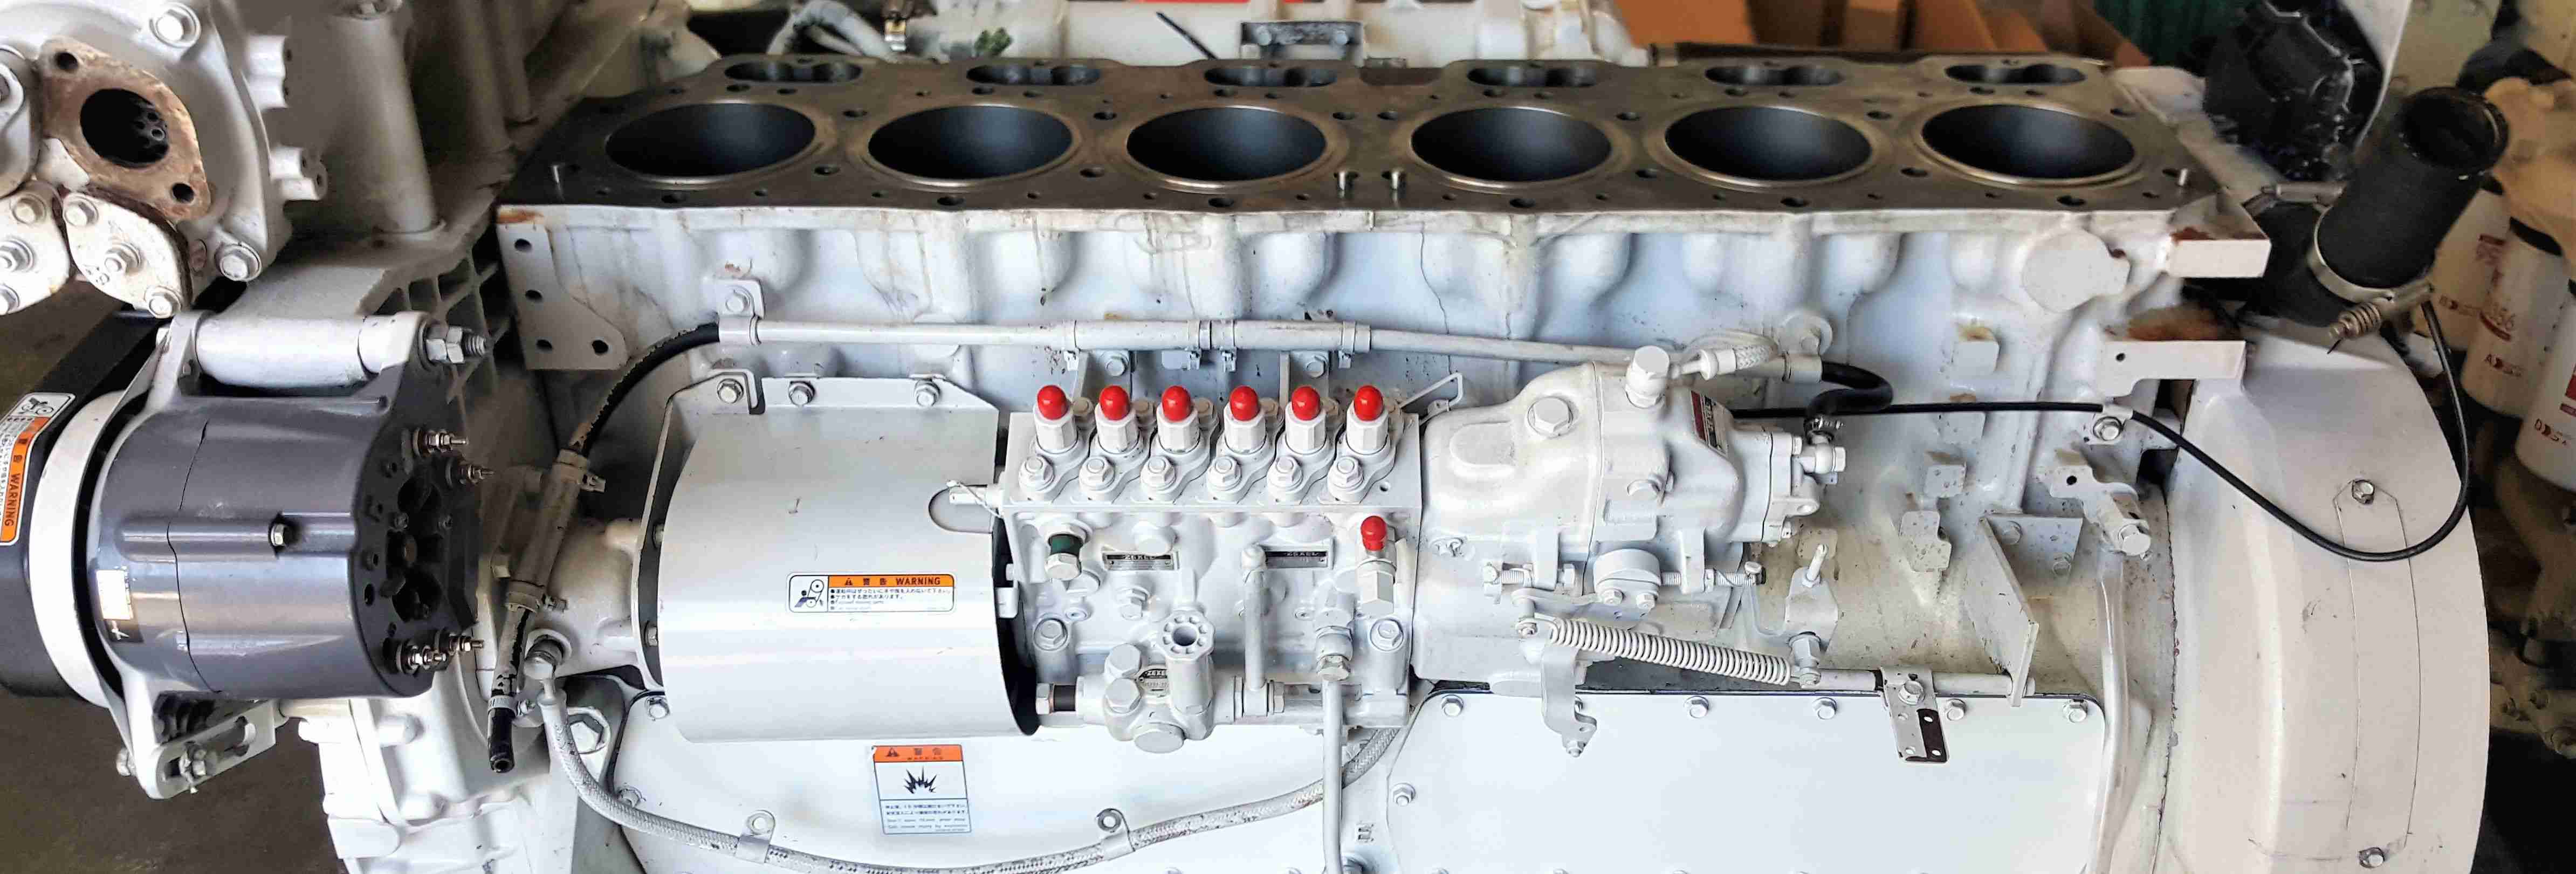 Yanmar marine diesel engine mechanics_Cairns